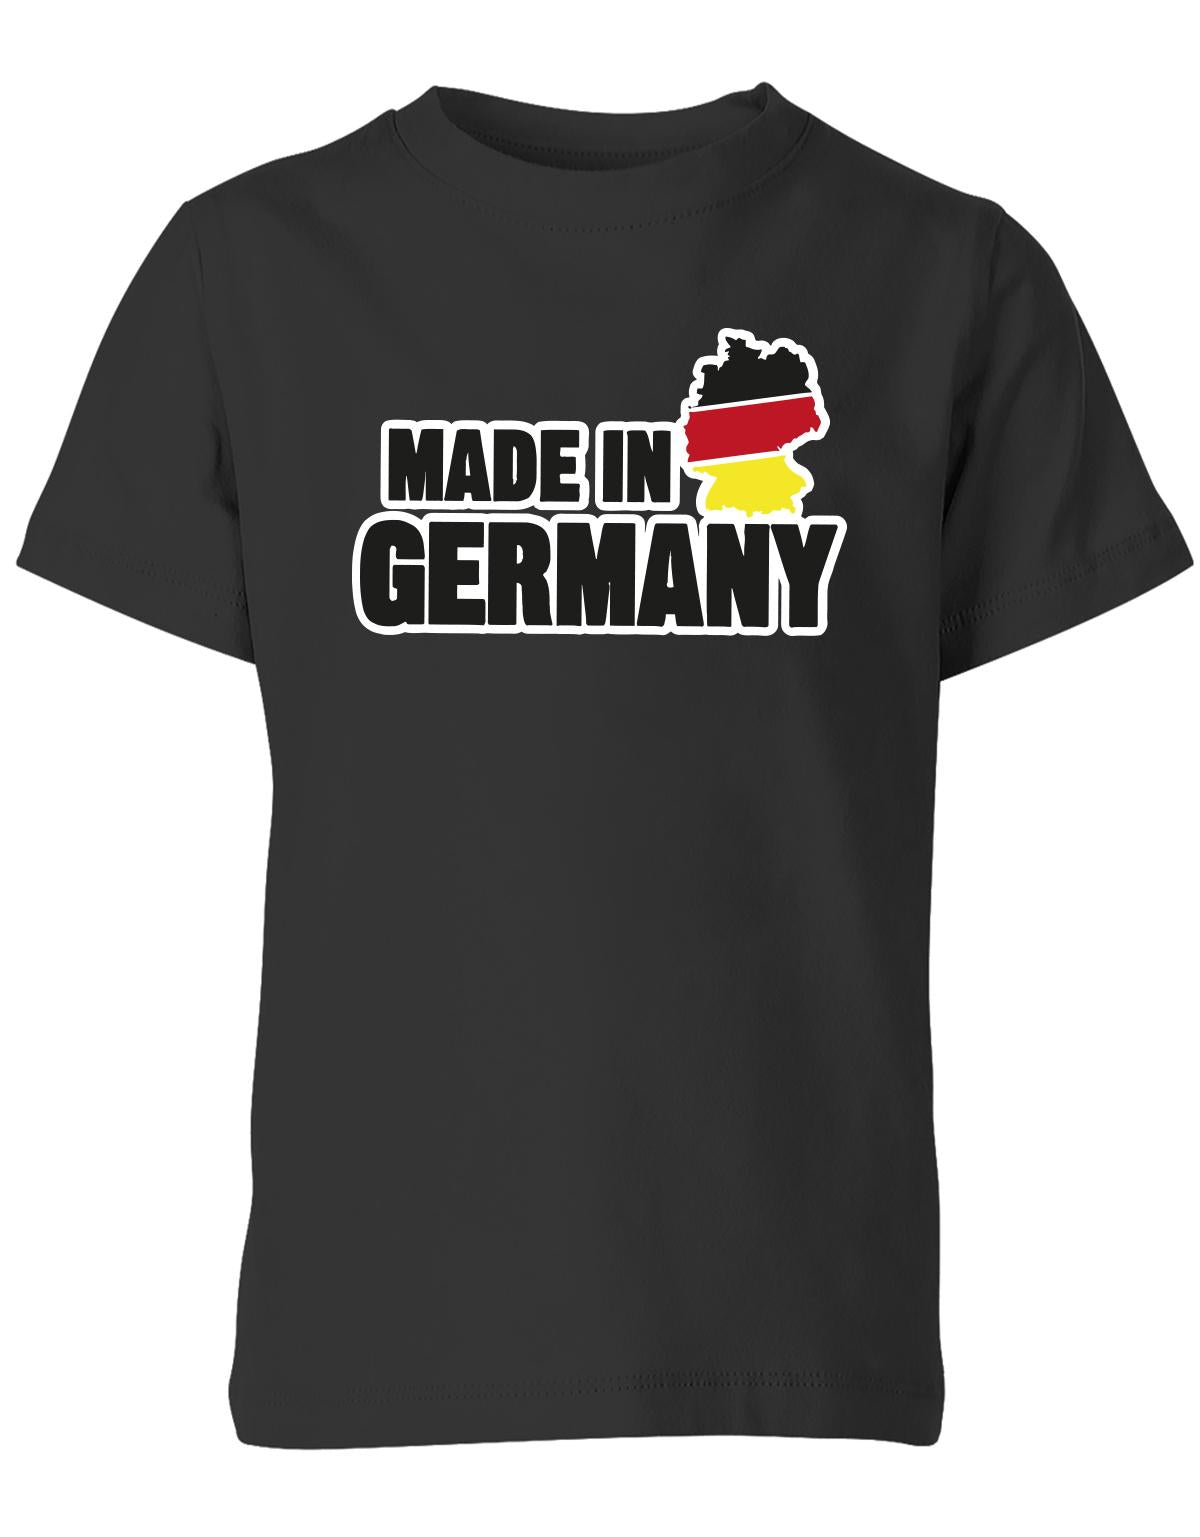 MAde-in-germany-Kinder-Shirt-Schwarz